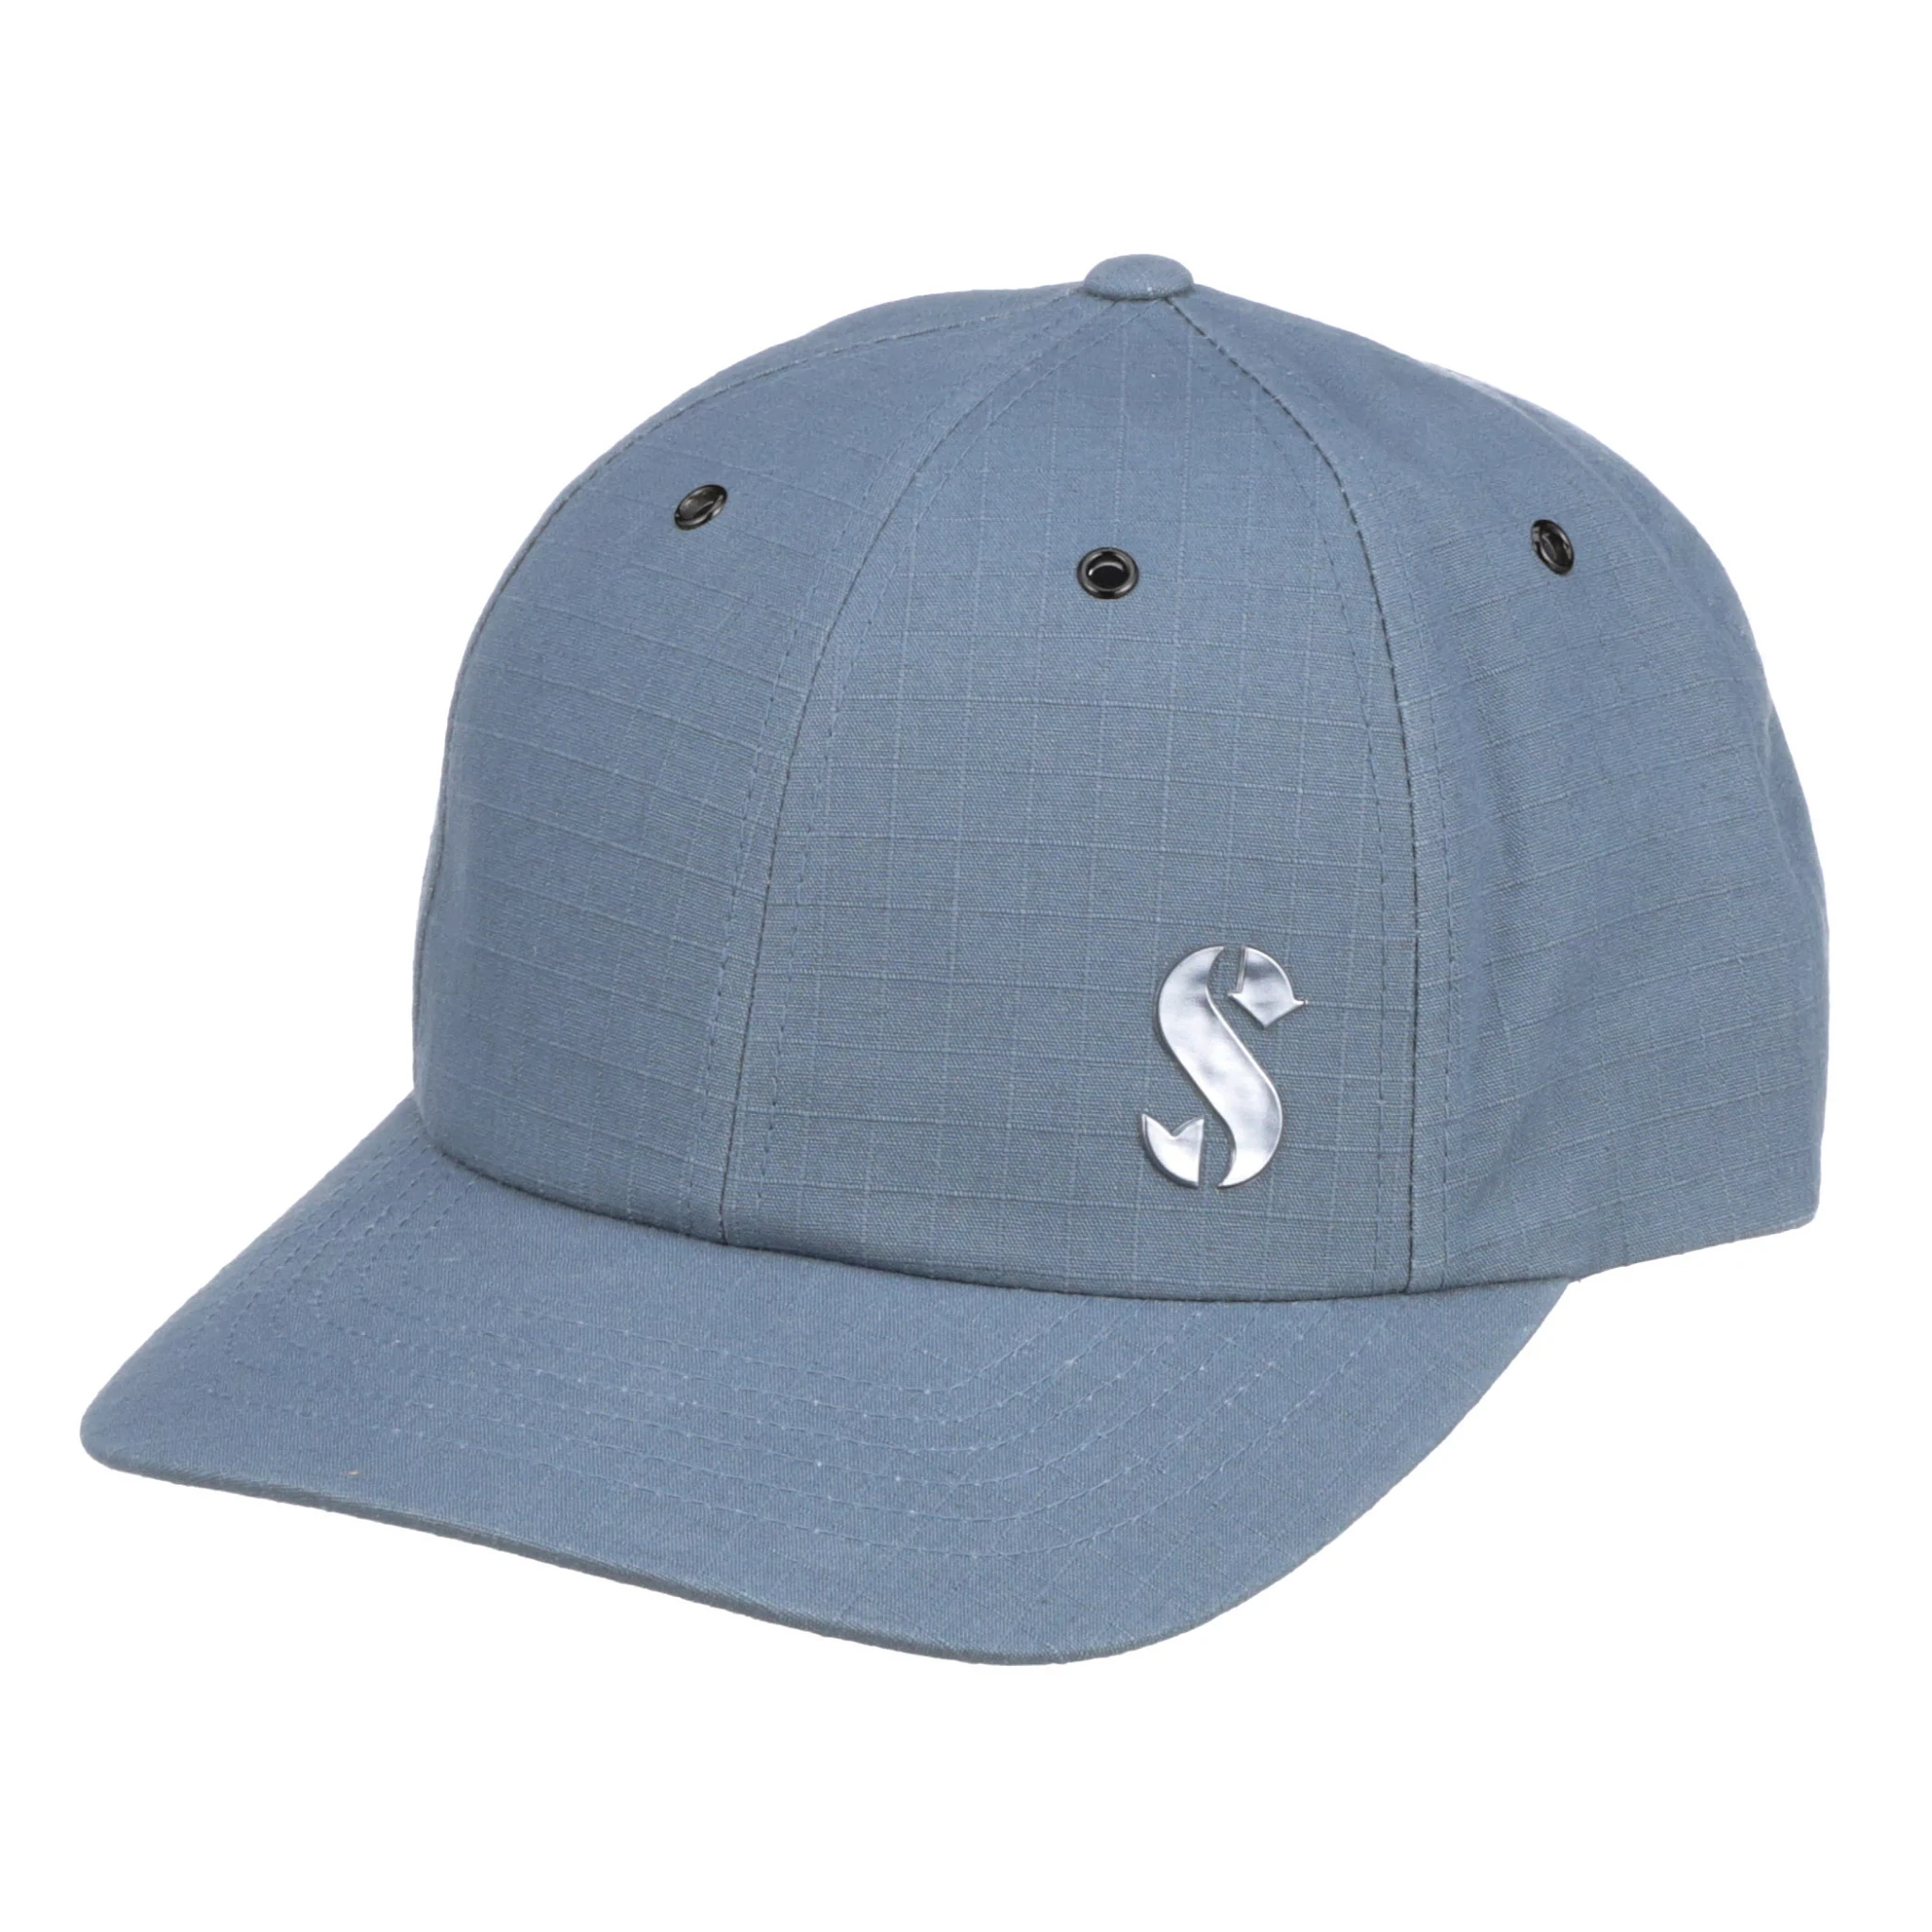 50.790.225, Silver S Logo Adjustable Hat, Gray